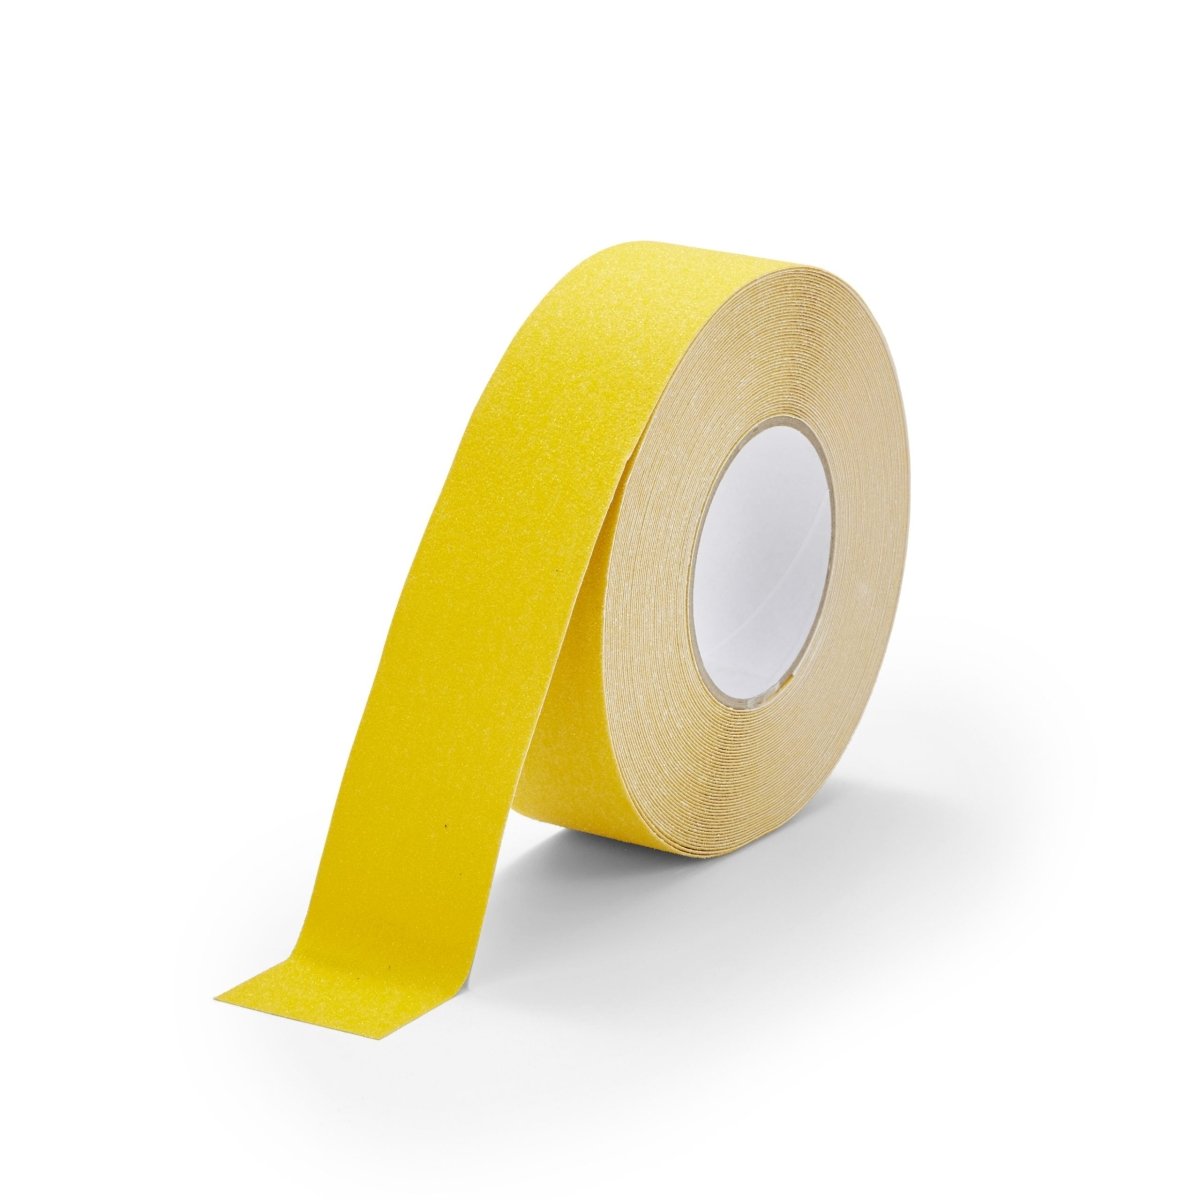 Course Grade Anti Slip Tape Rolls 18m - Slips Away - H3402Y Safety-Grip Coarse - Yellow-50mm-1-1-1-1 -